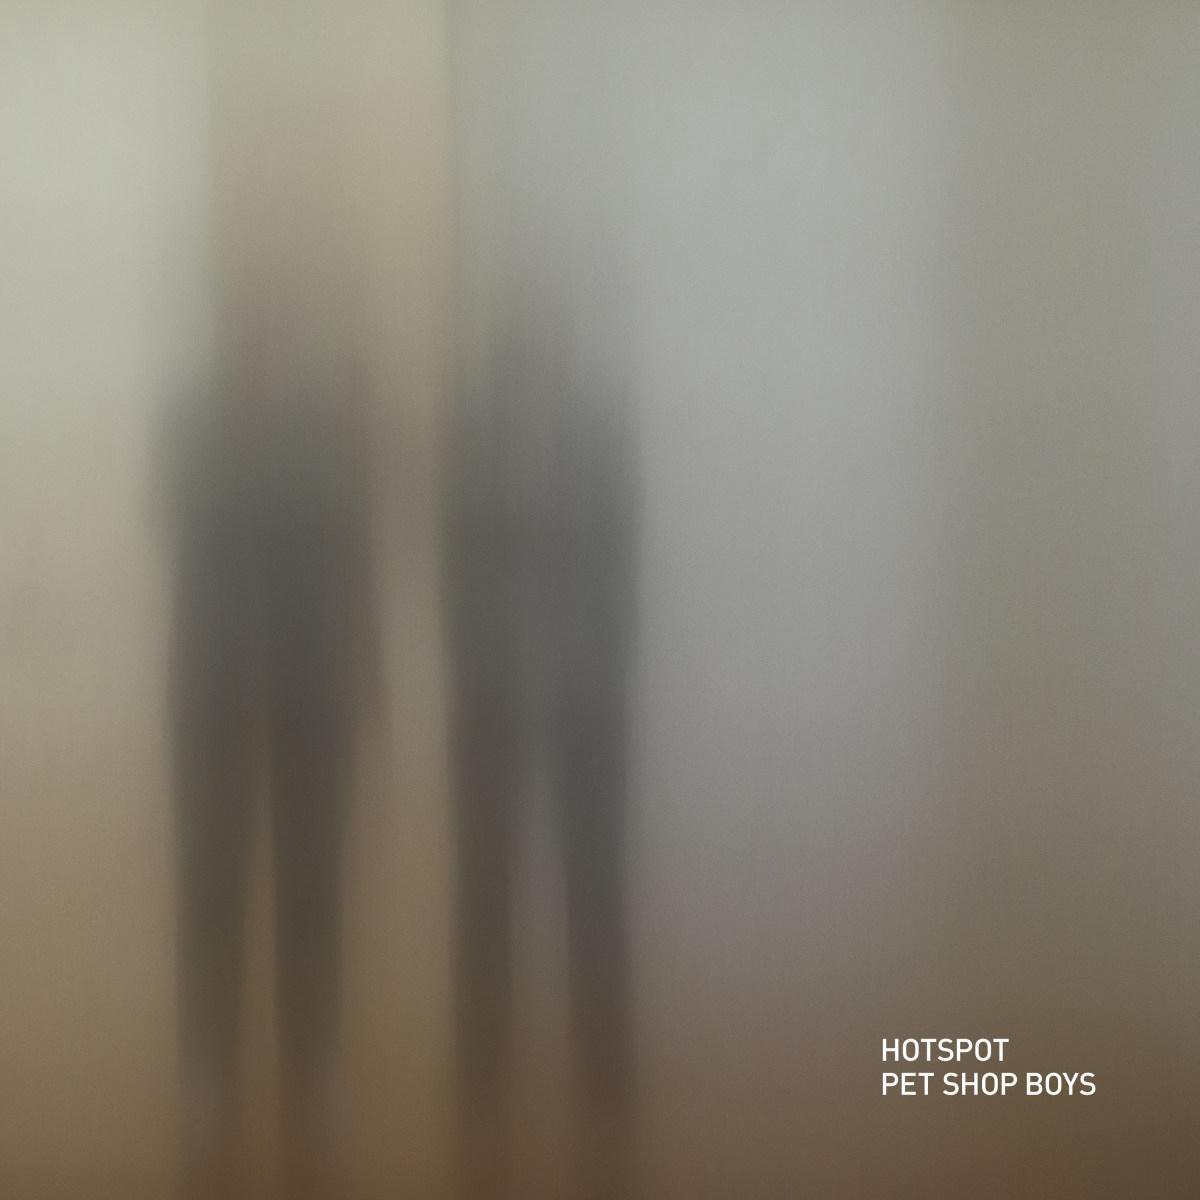 Hotspot (LP) - Pet Shop Boys